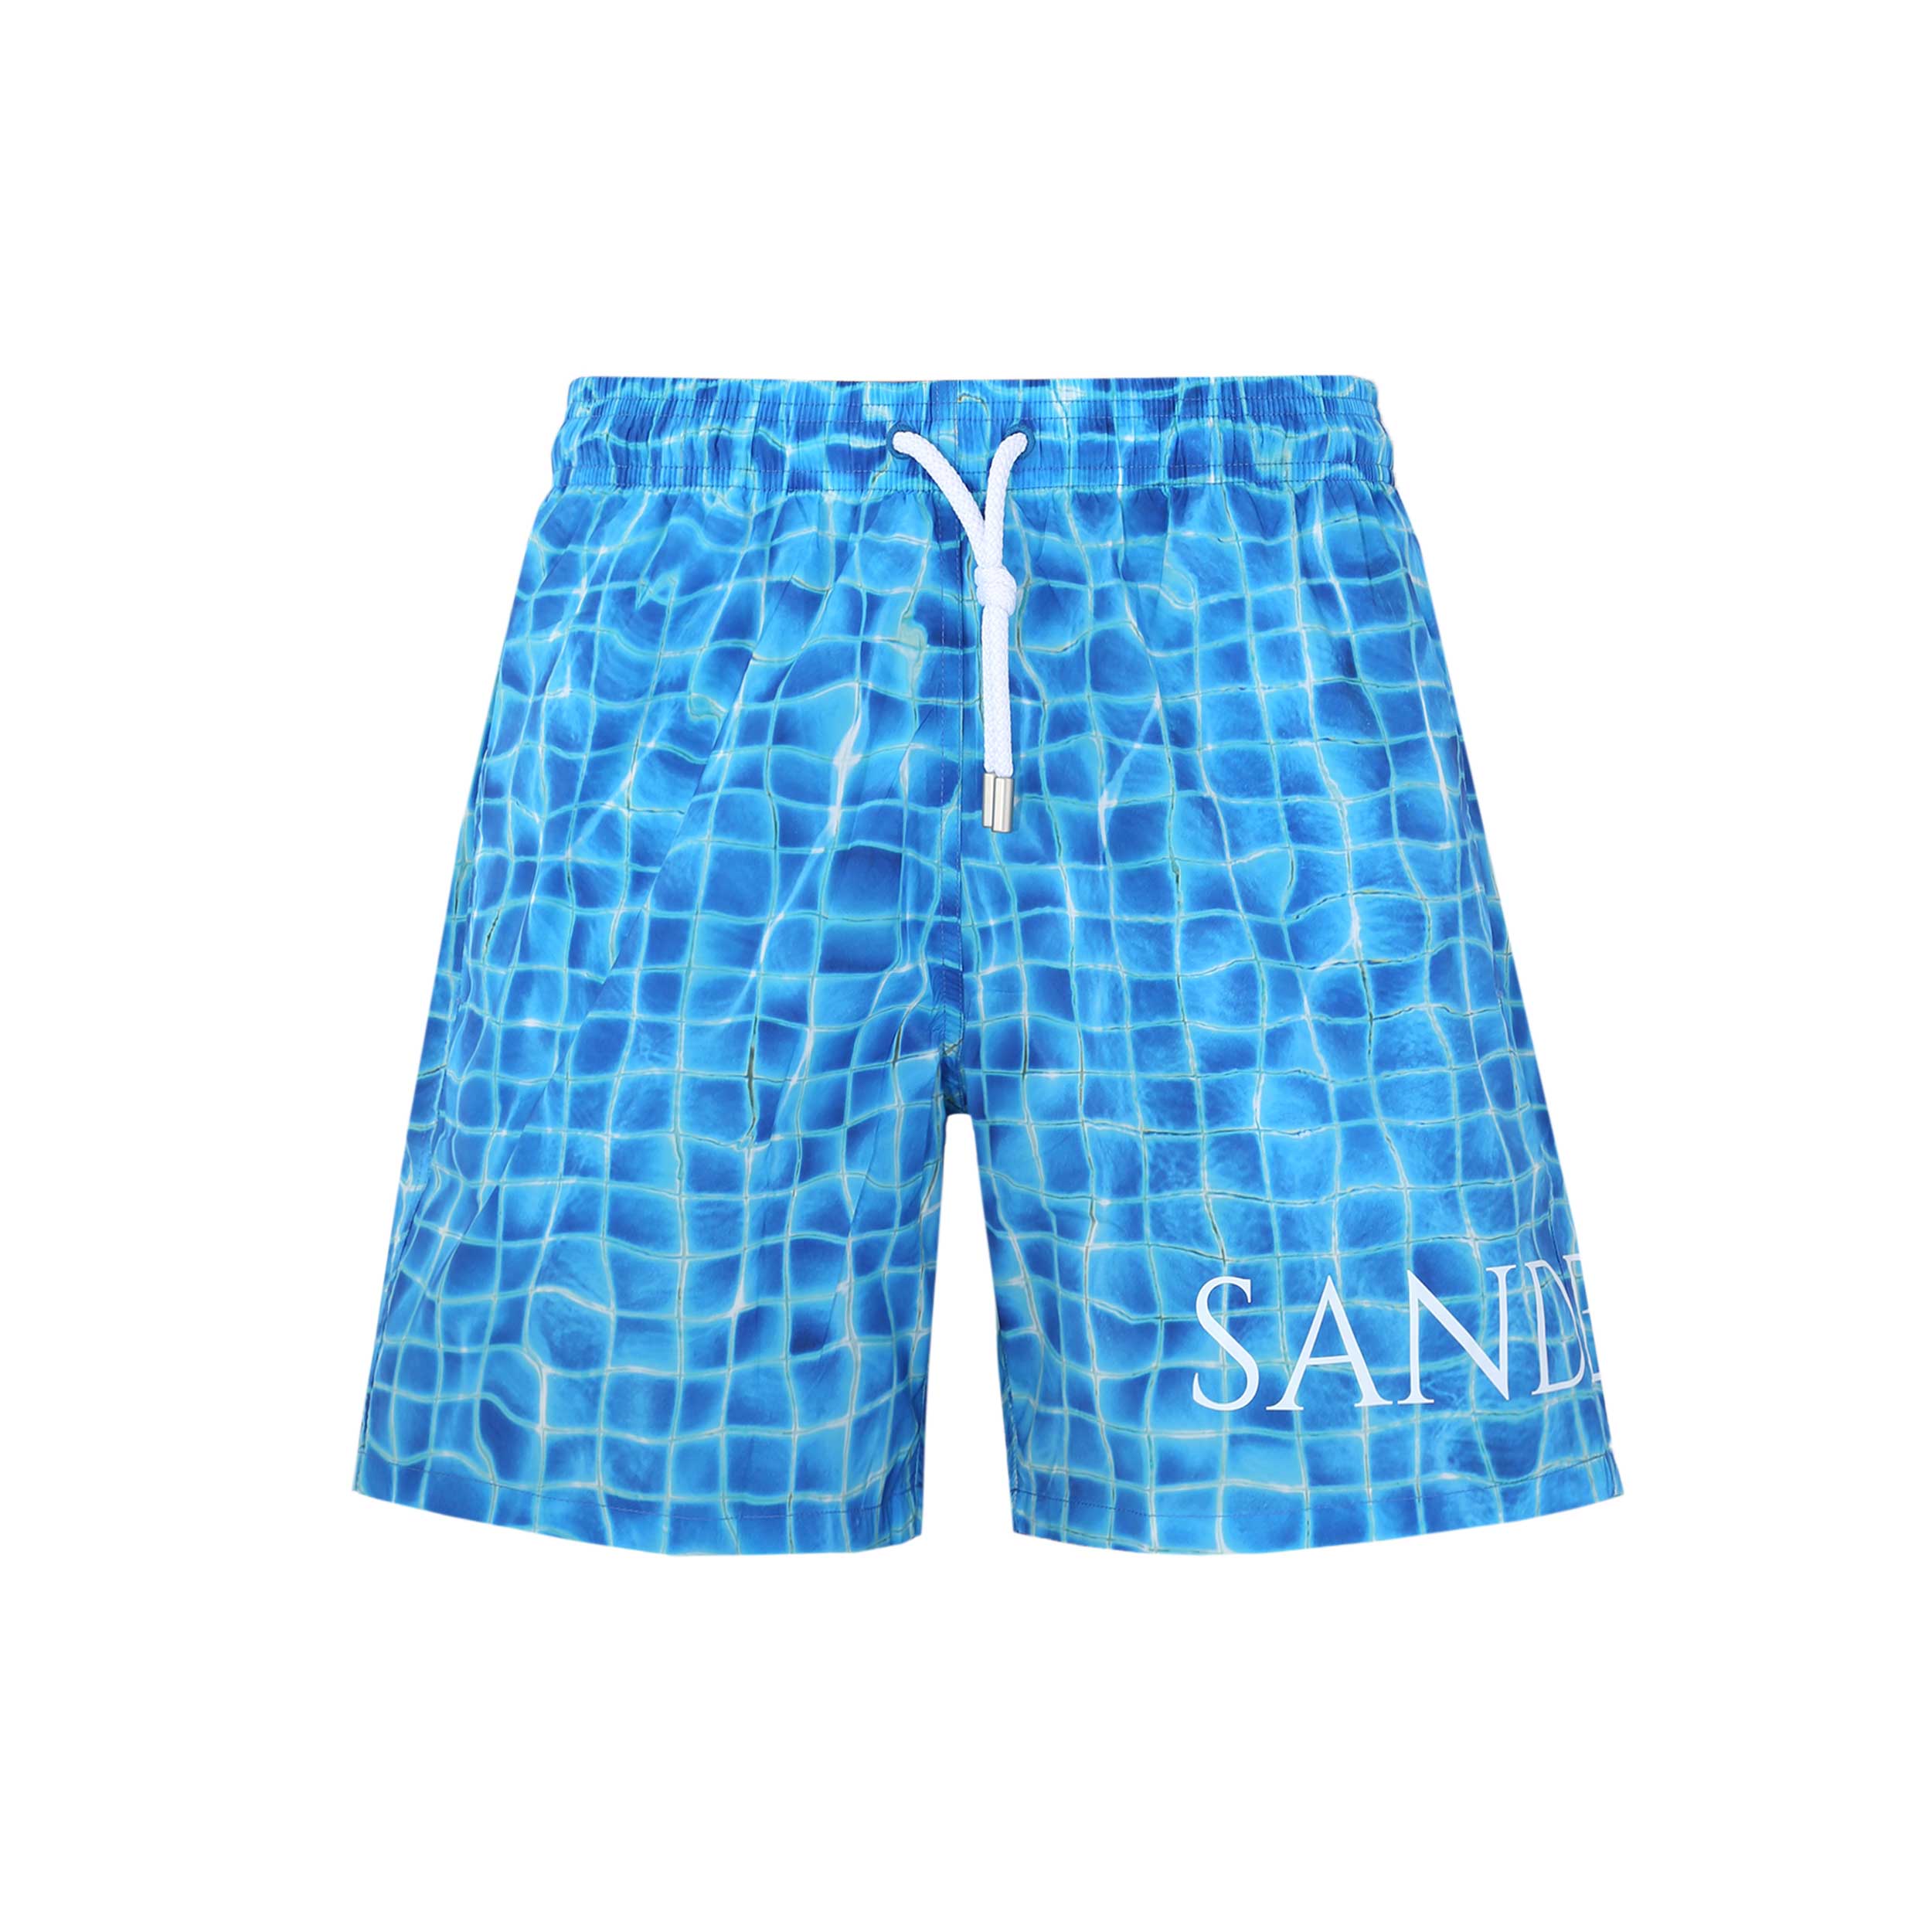 Sandbanks Mosaic Pool Side Swim Shorts in Blue